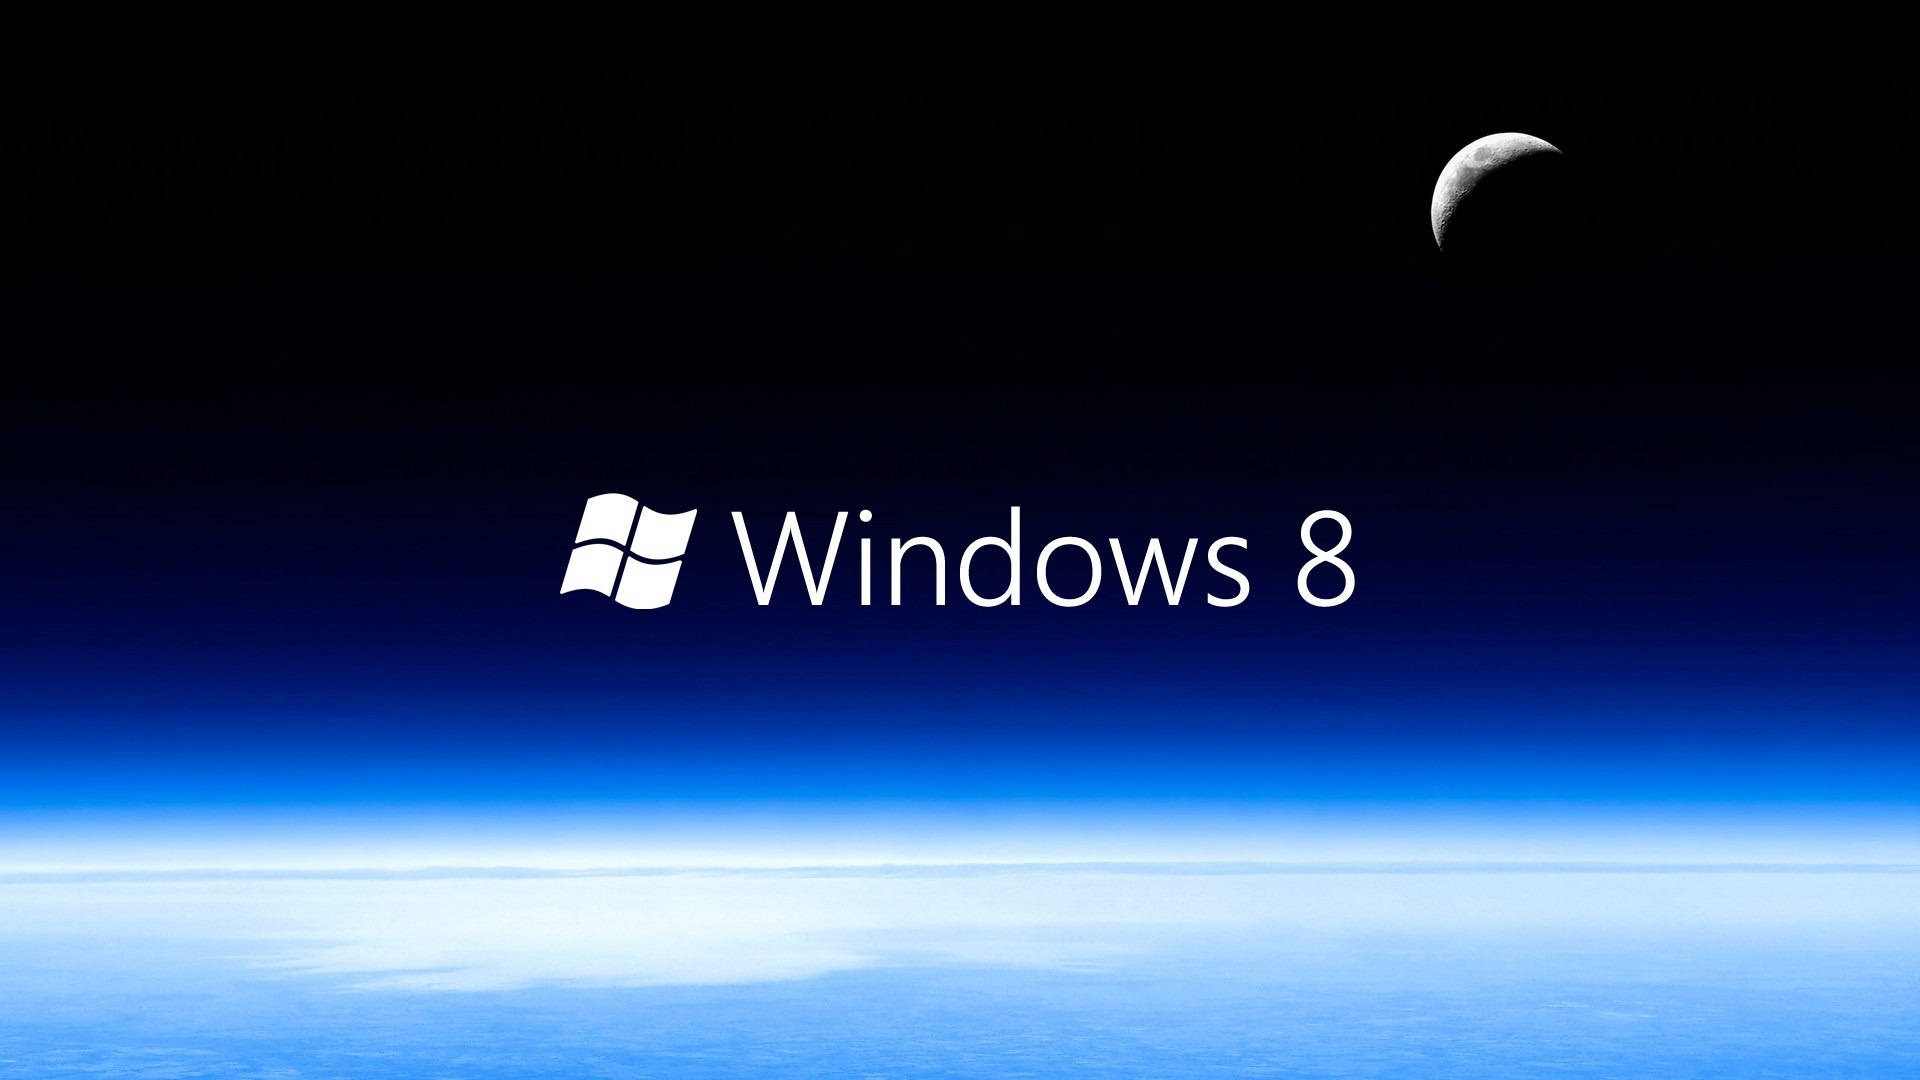 Windows 8 Space Background Wallpaper